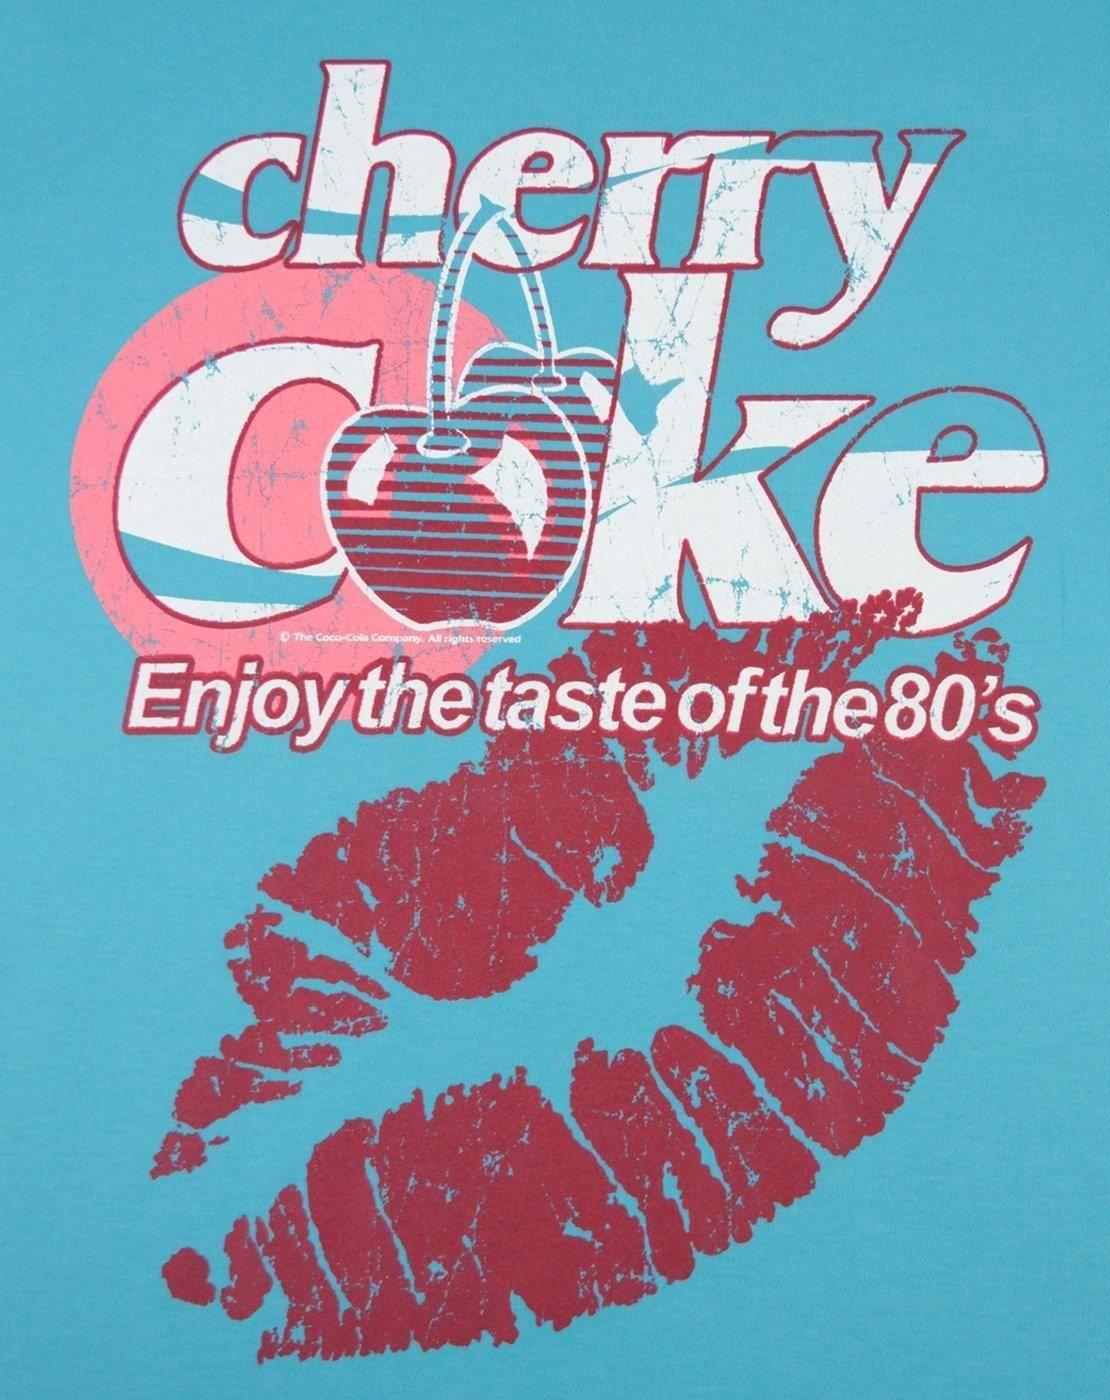 Cherry Coke Logo - Cherry Coke Taste Of The 80s Women's T Shirt By Worn